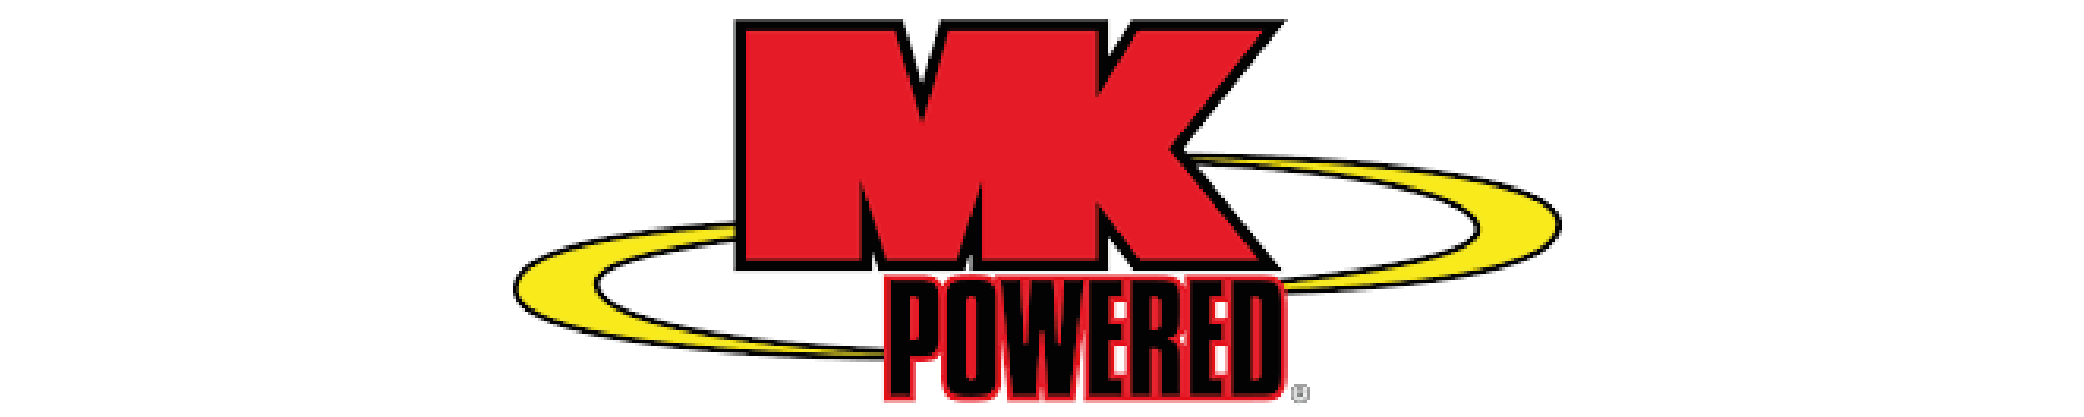 MK POWERED AGM Akkus für Elektrofahrzeuge kaufen